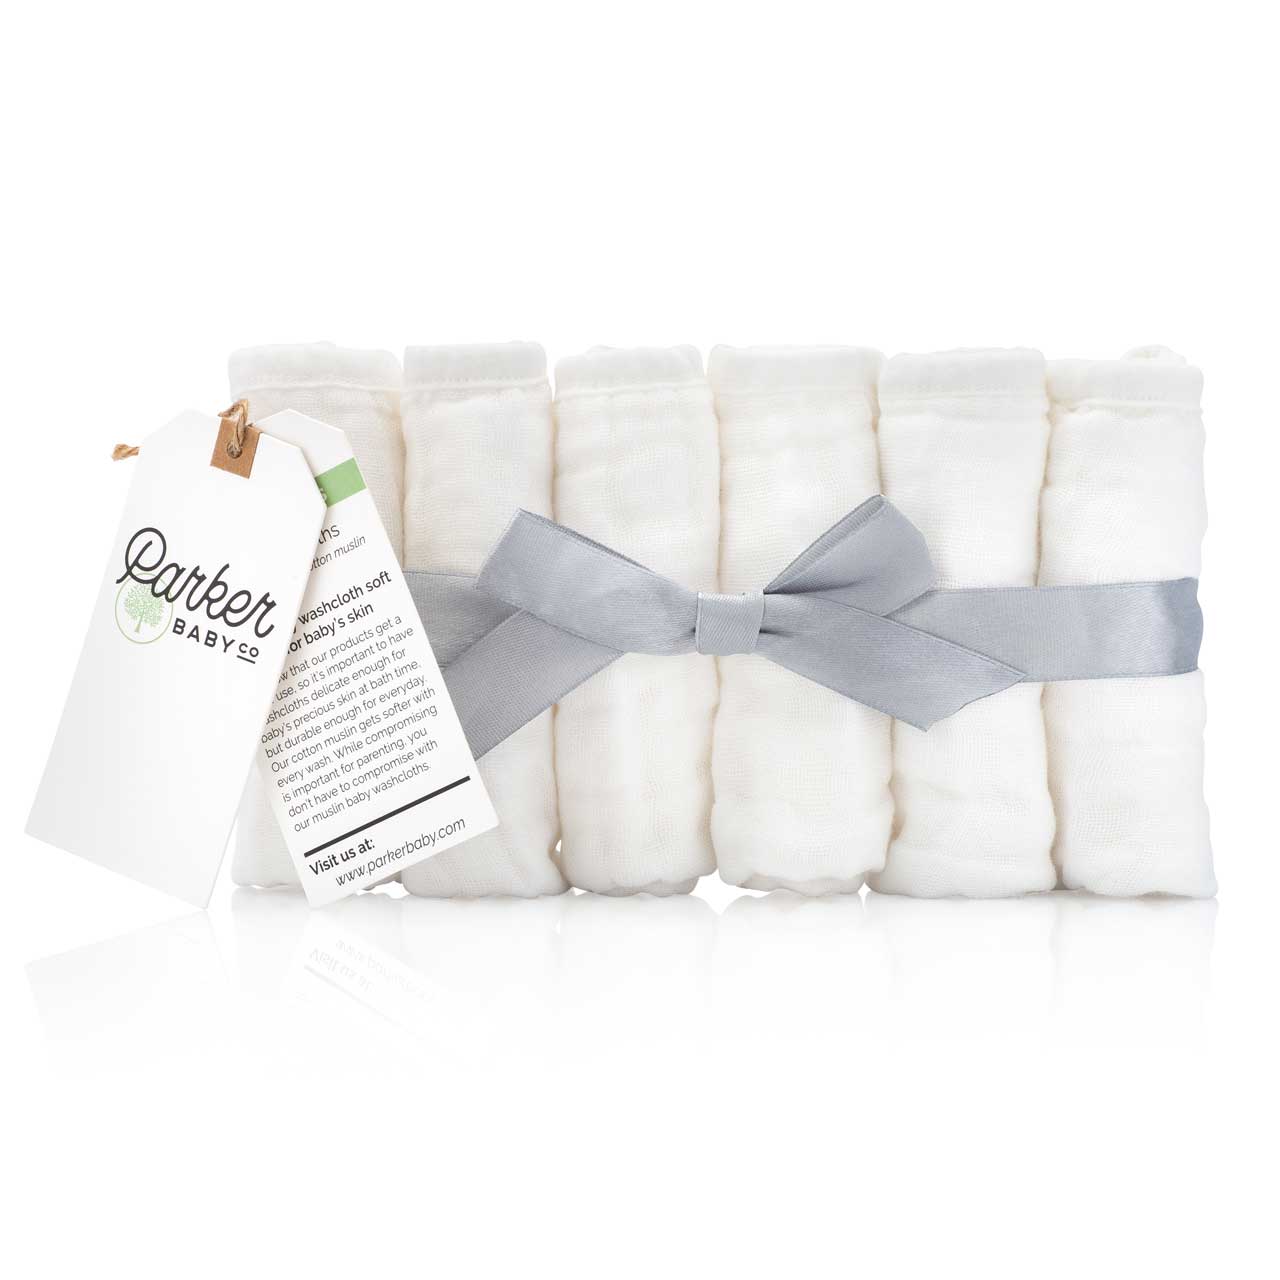 American Soft Linen 4 Pack Washcloth Set, 100% Cotton Washcloth